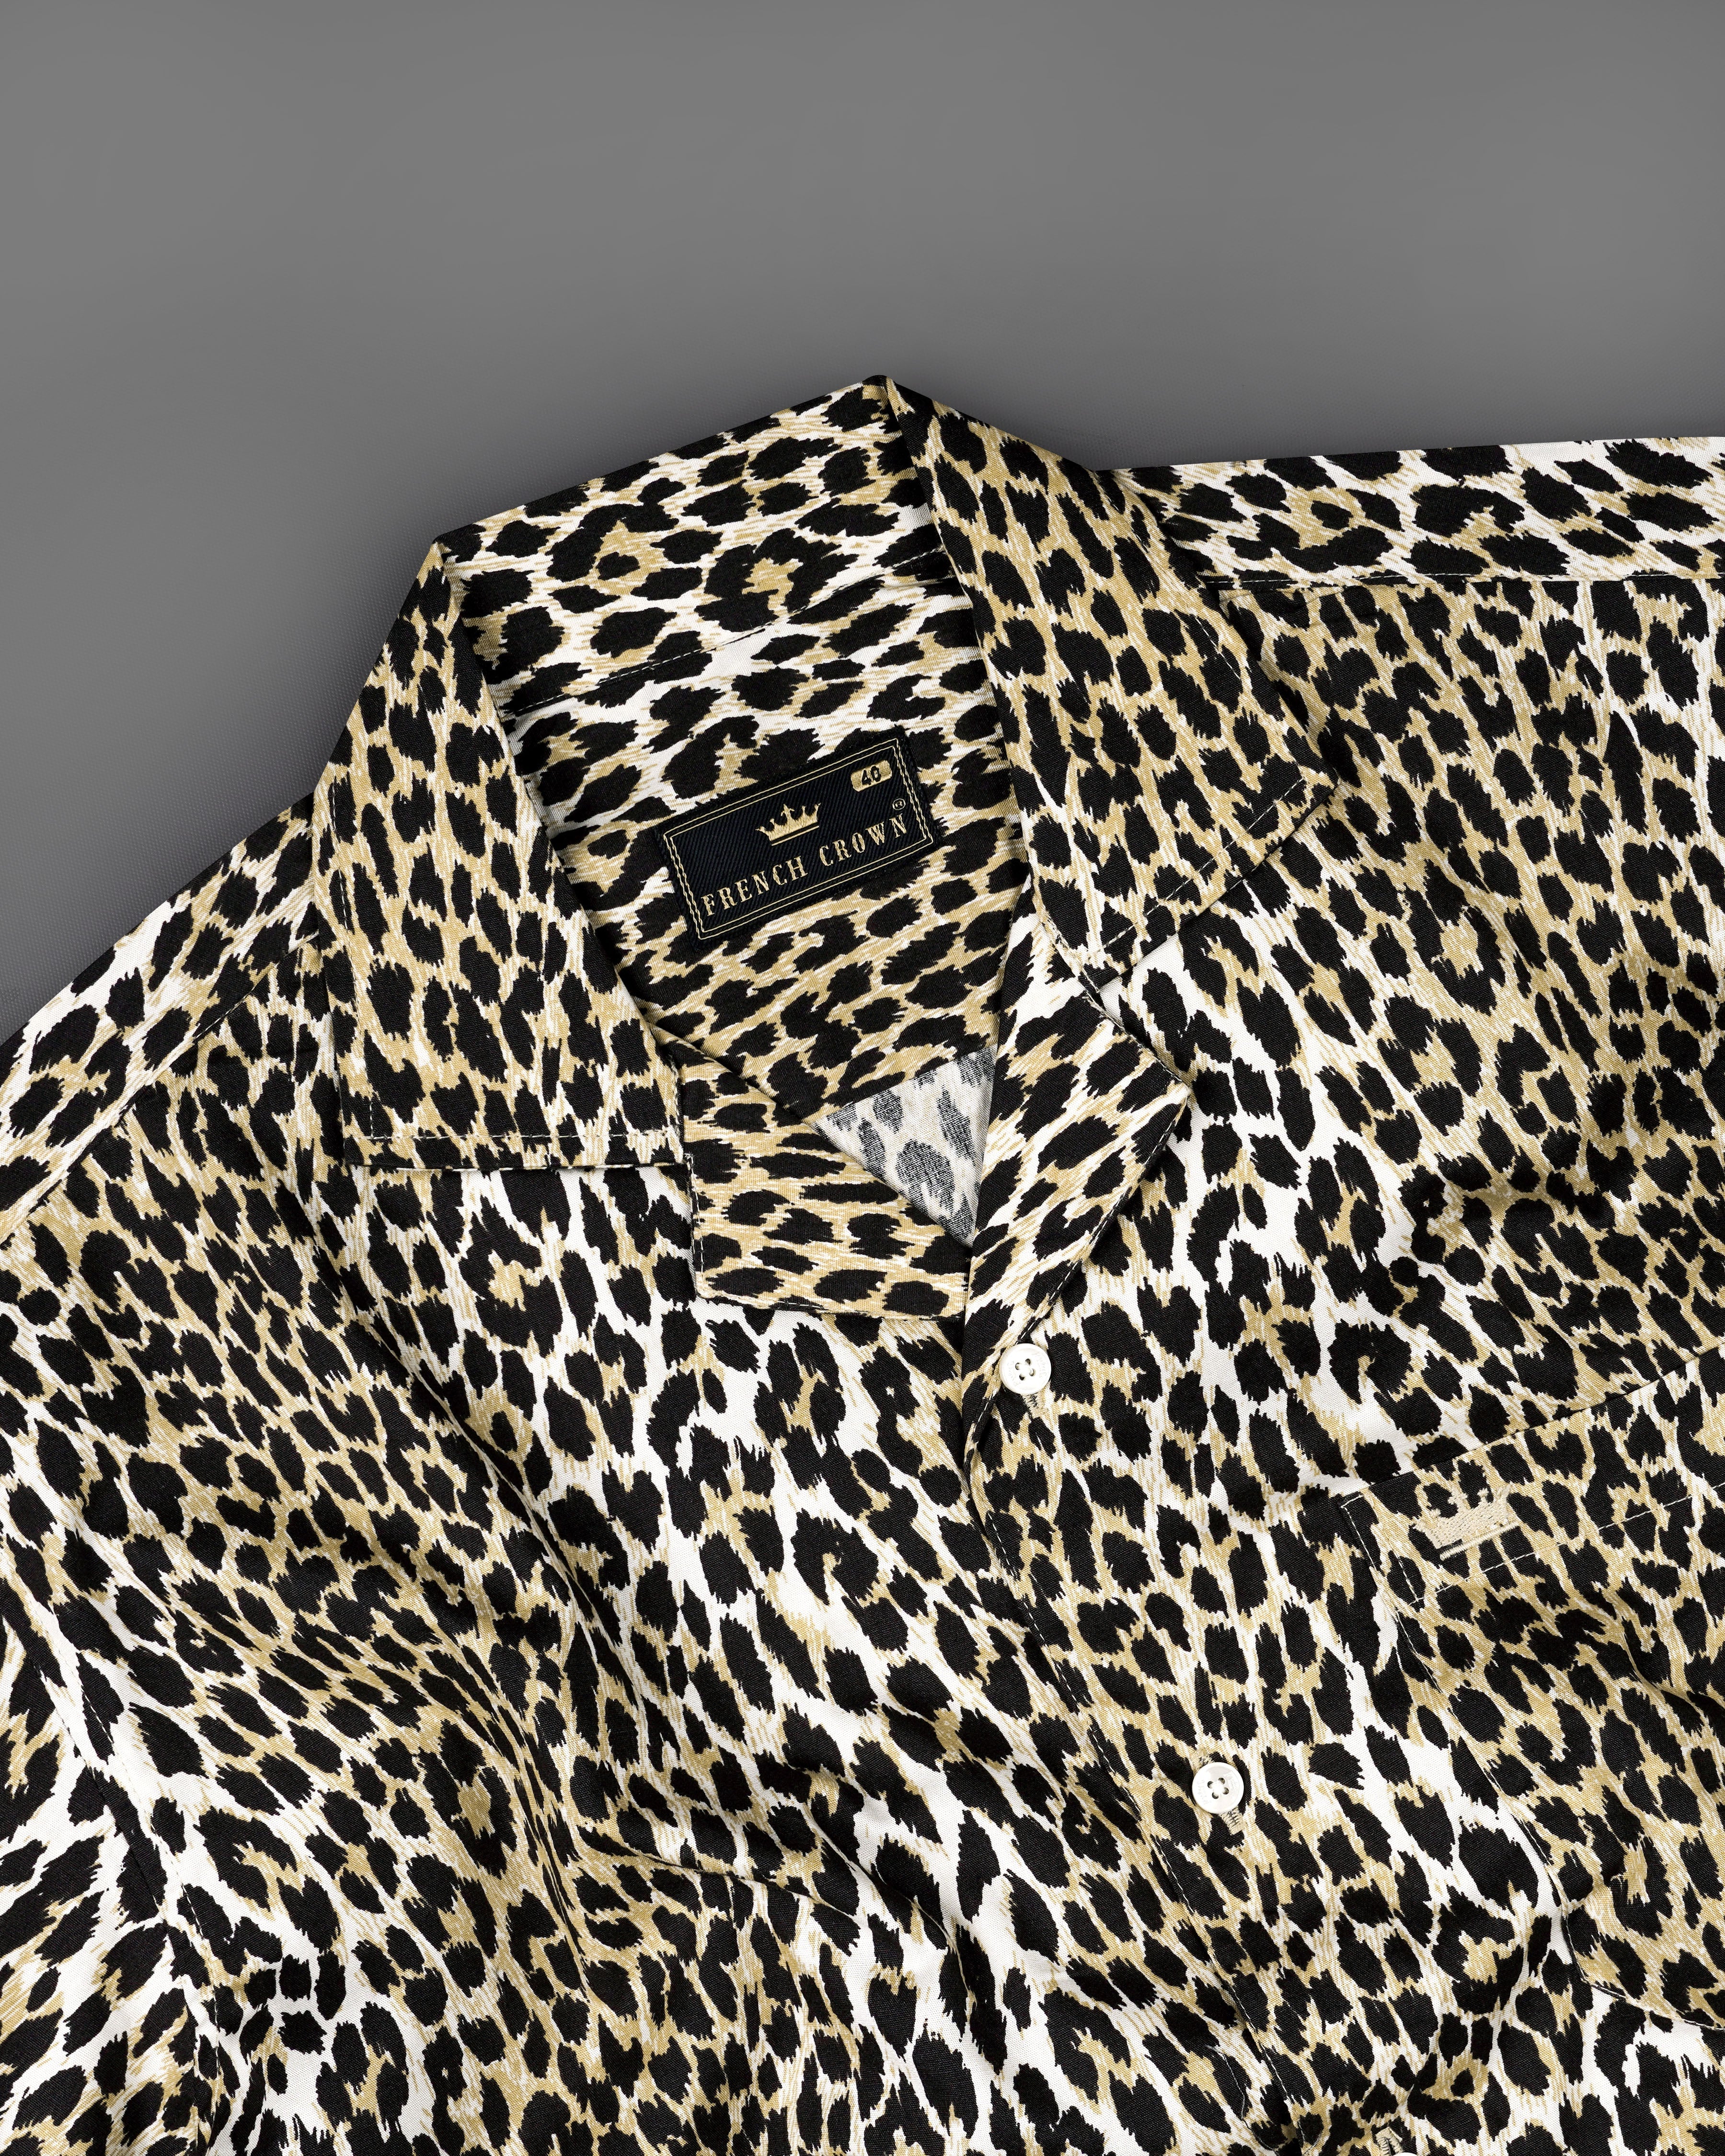 Cararra Cream with Brandy Brown and Black Leopard Striped Printed Premium Cotton Shirt        8364-CC-H-38,8364-CC-H-39,8364-CC-H-40,8364-CC-H-42,8364-CC-H-44,8364-CC-H-46,8364-CC-H-48,8364-CC-H-50, 8364-CC-H-52